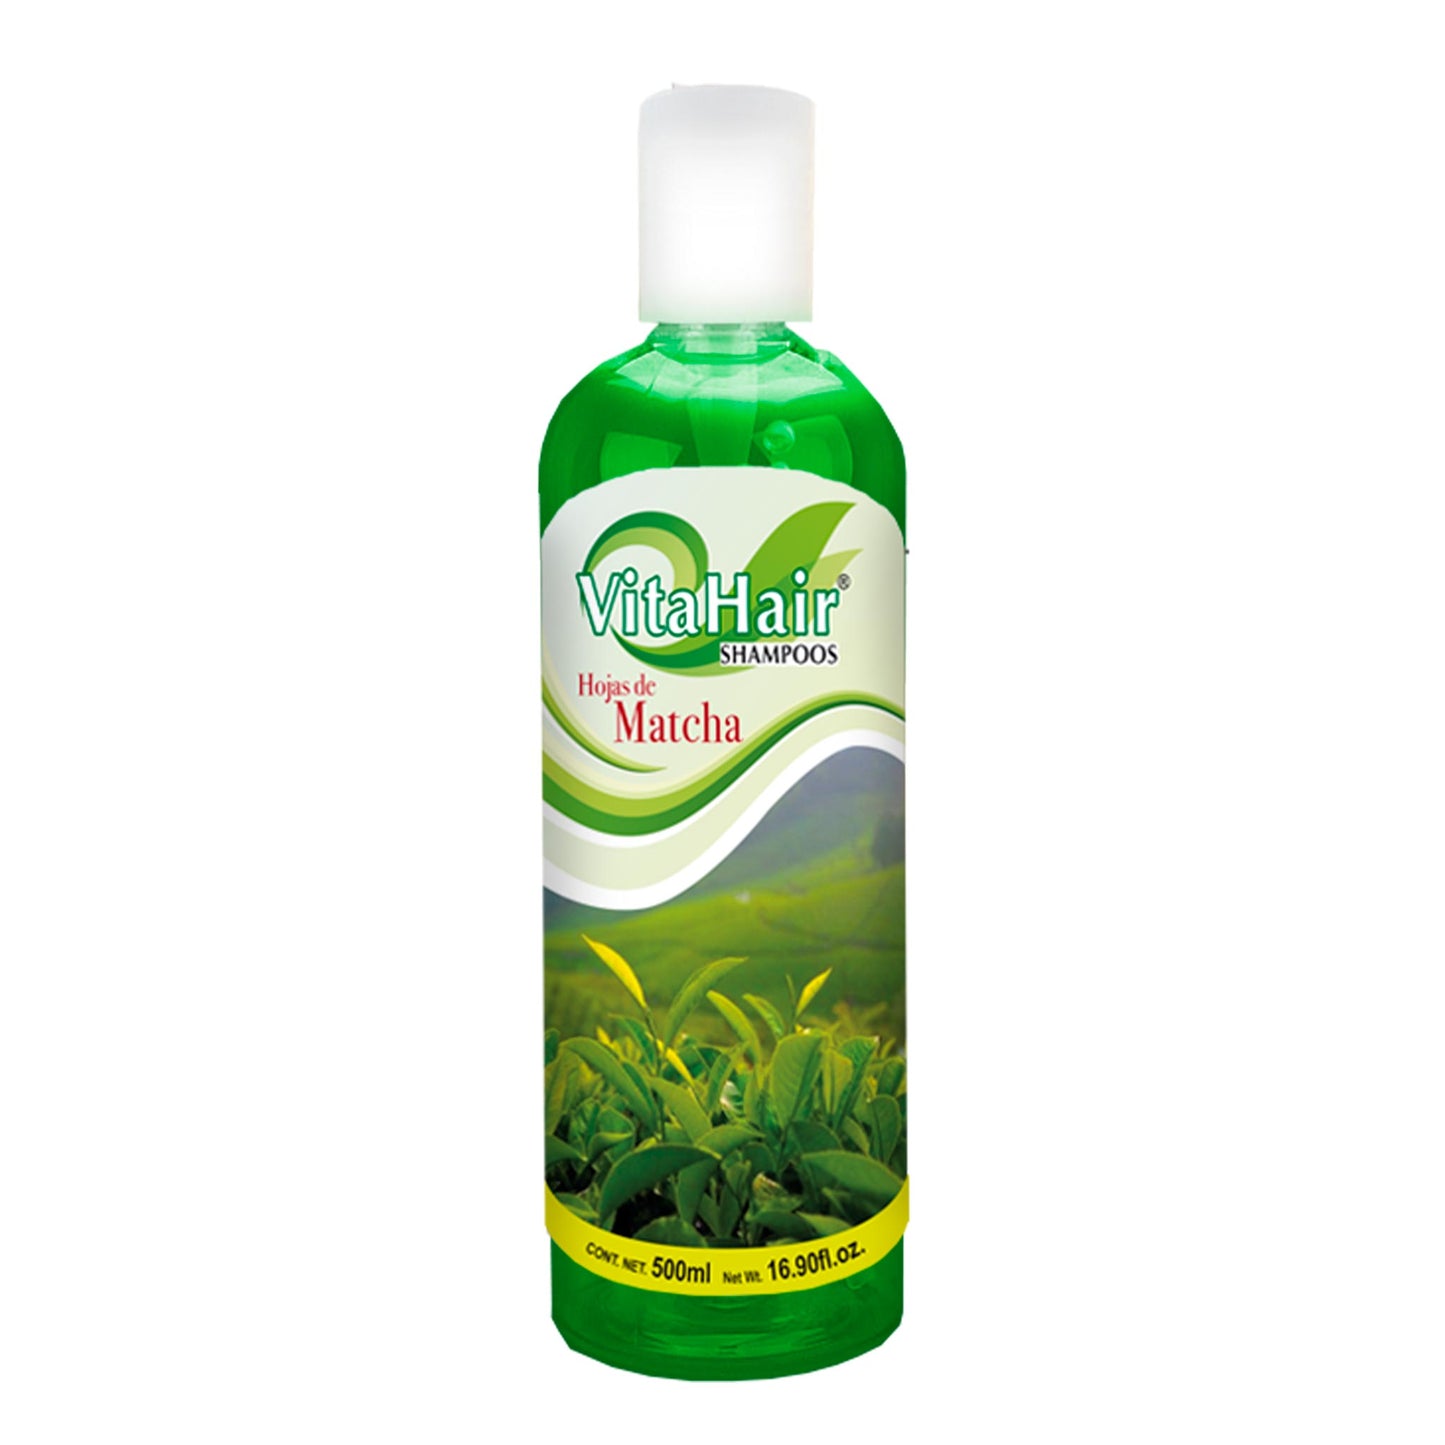 VITAHAIR ® shampoo de matcha 500ml